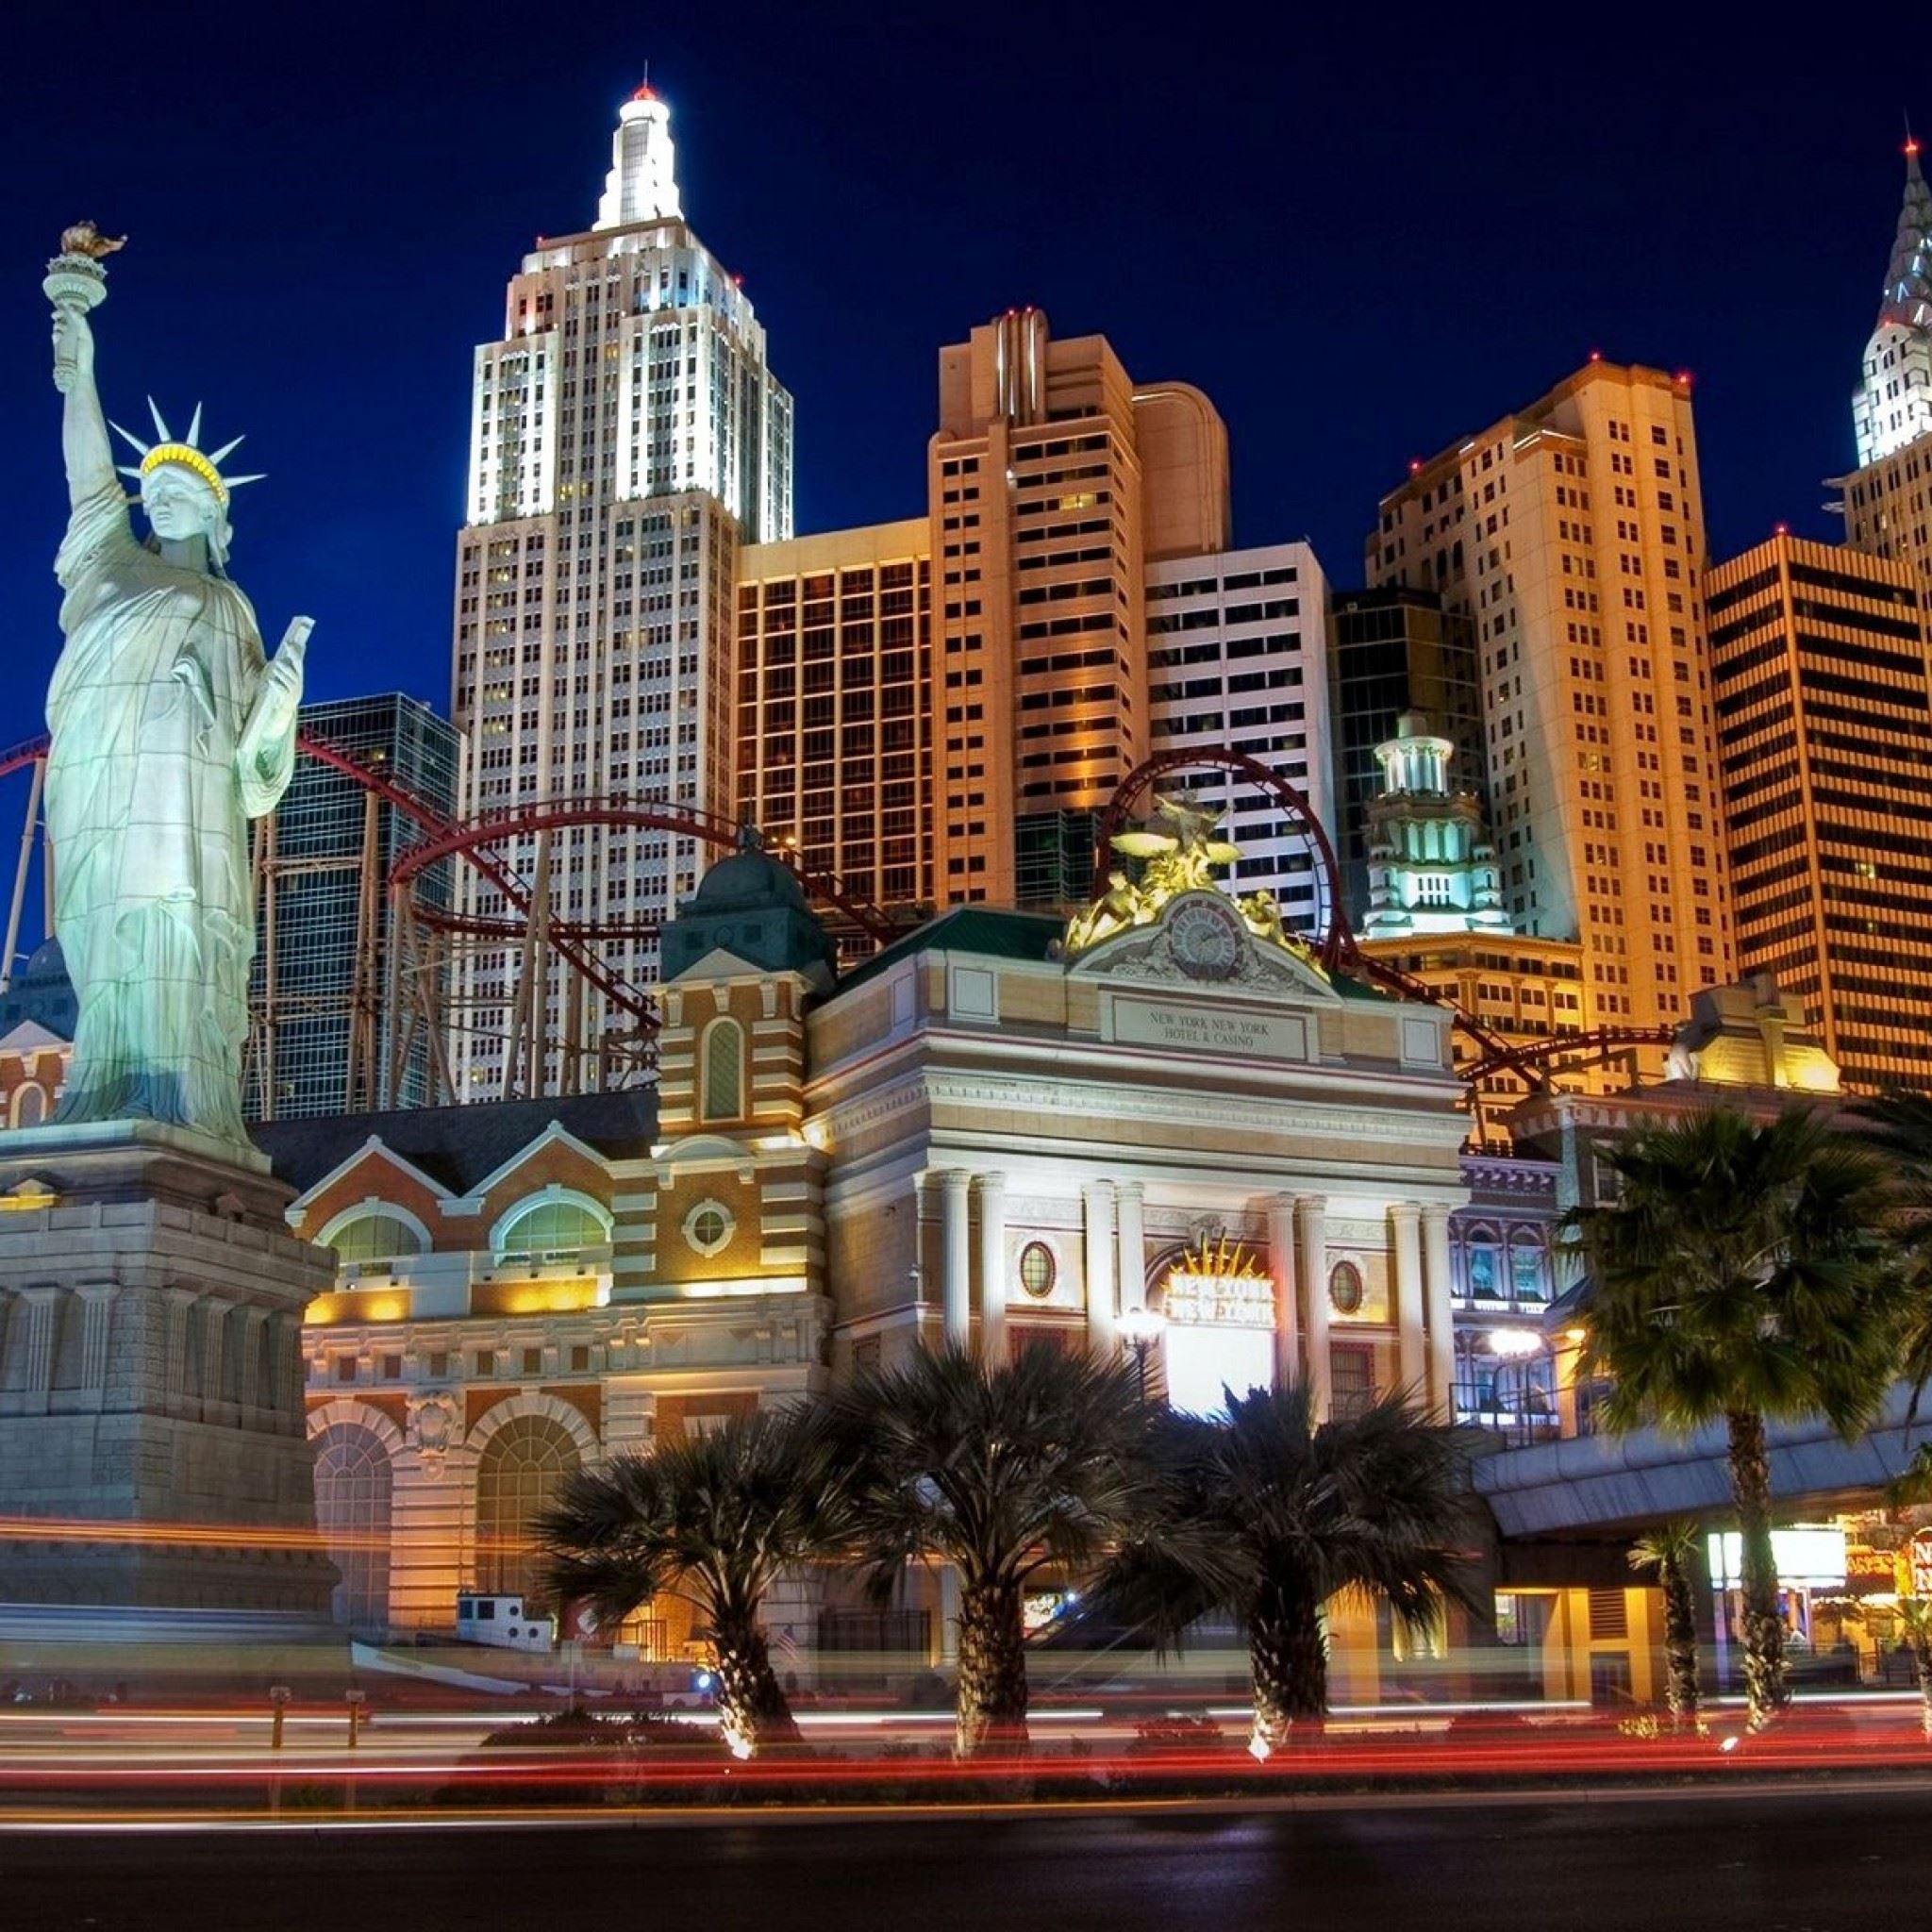 New York Hotel Casino iPad Air Wallpaper Free Download